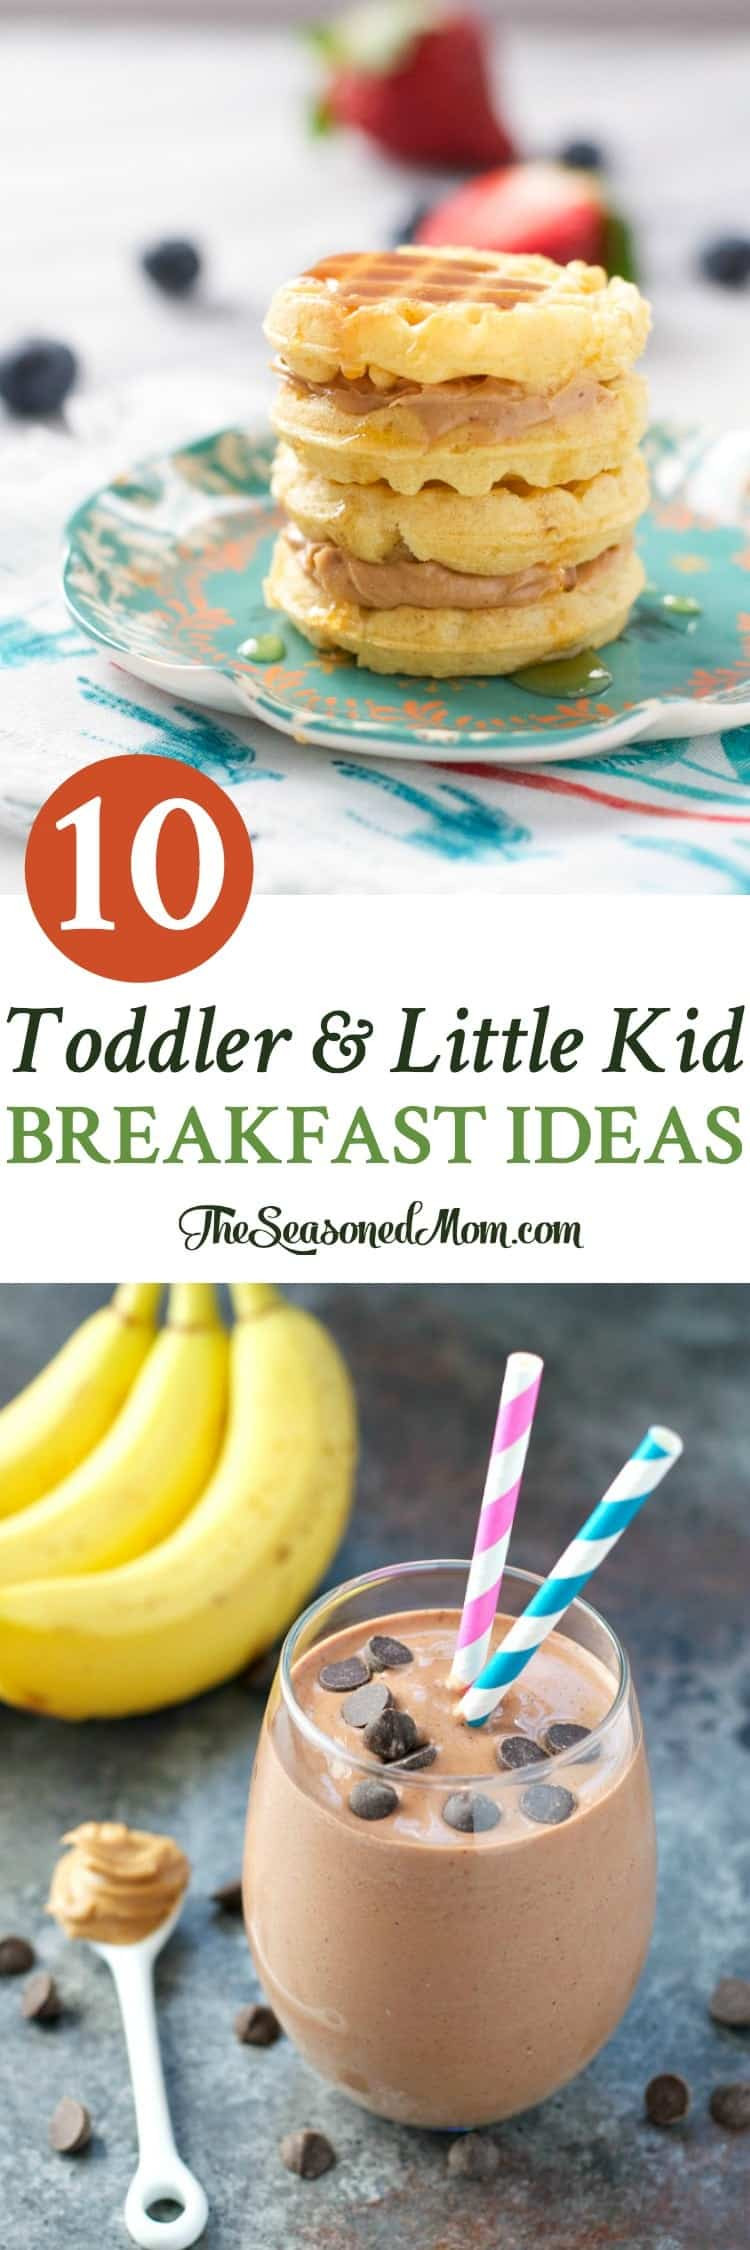 Breakfast Options For Kids
 10 Toddler and Little Kid Breakfast Ideas The Seasoned Mom